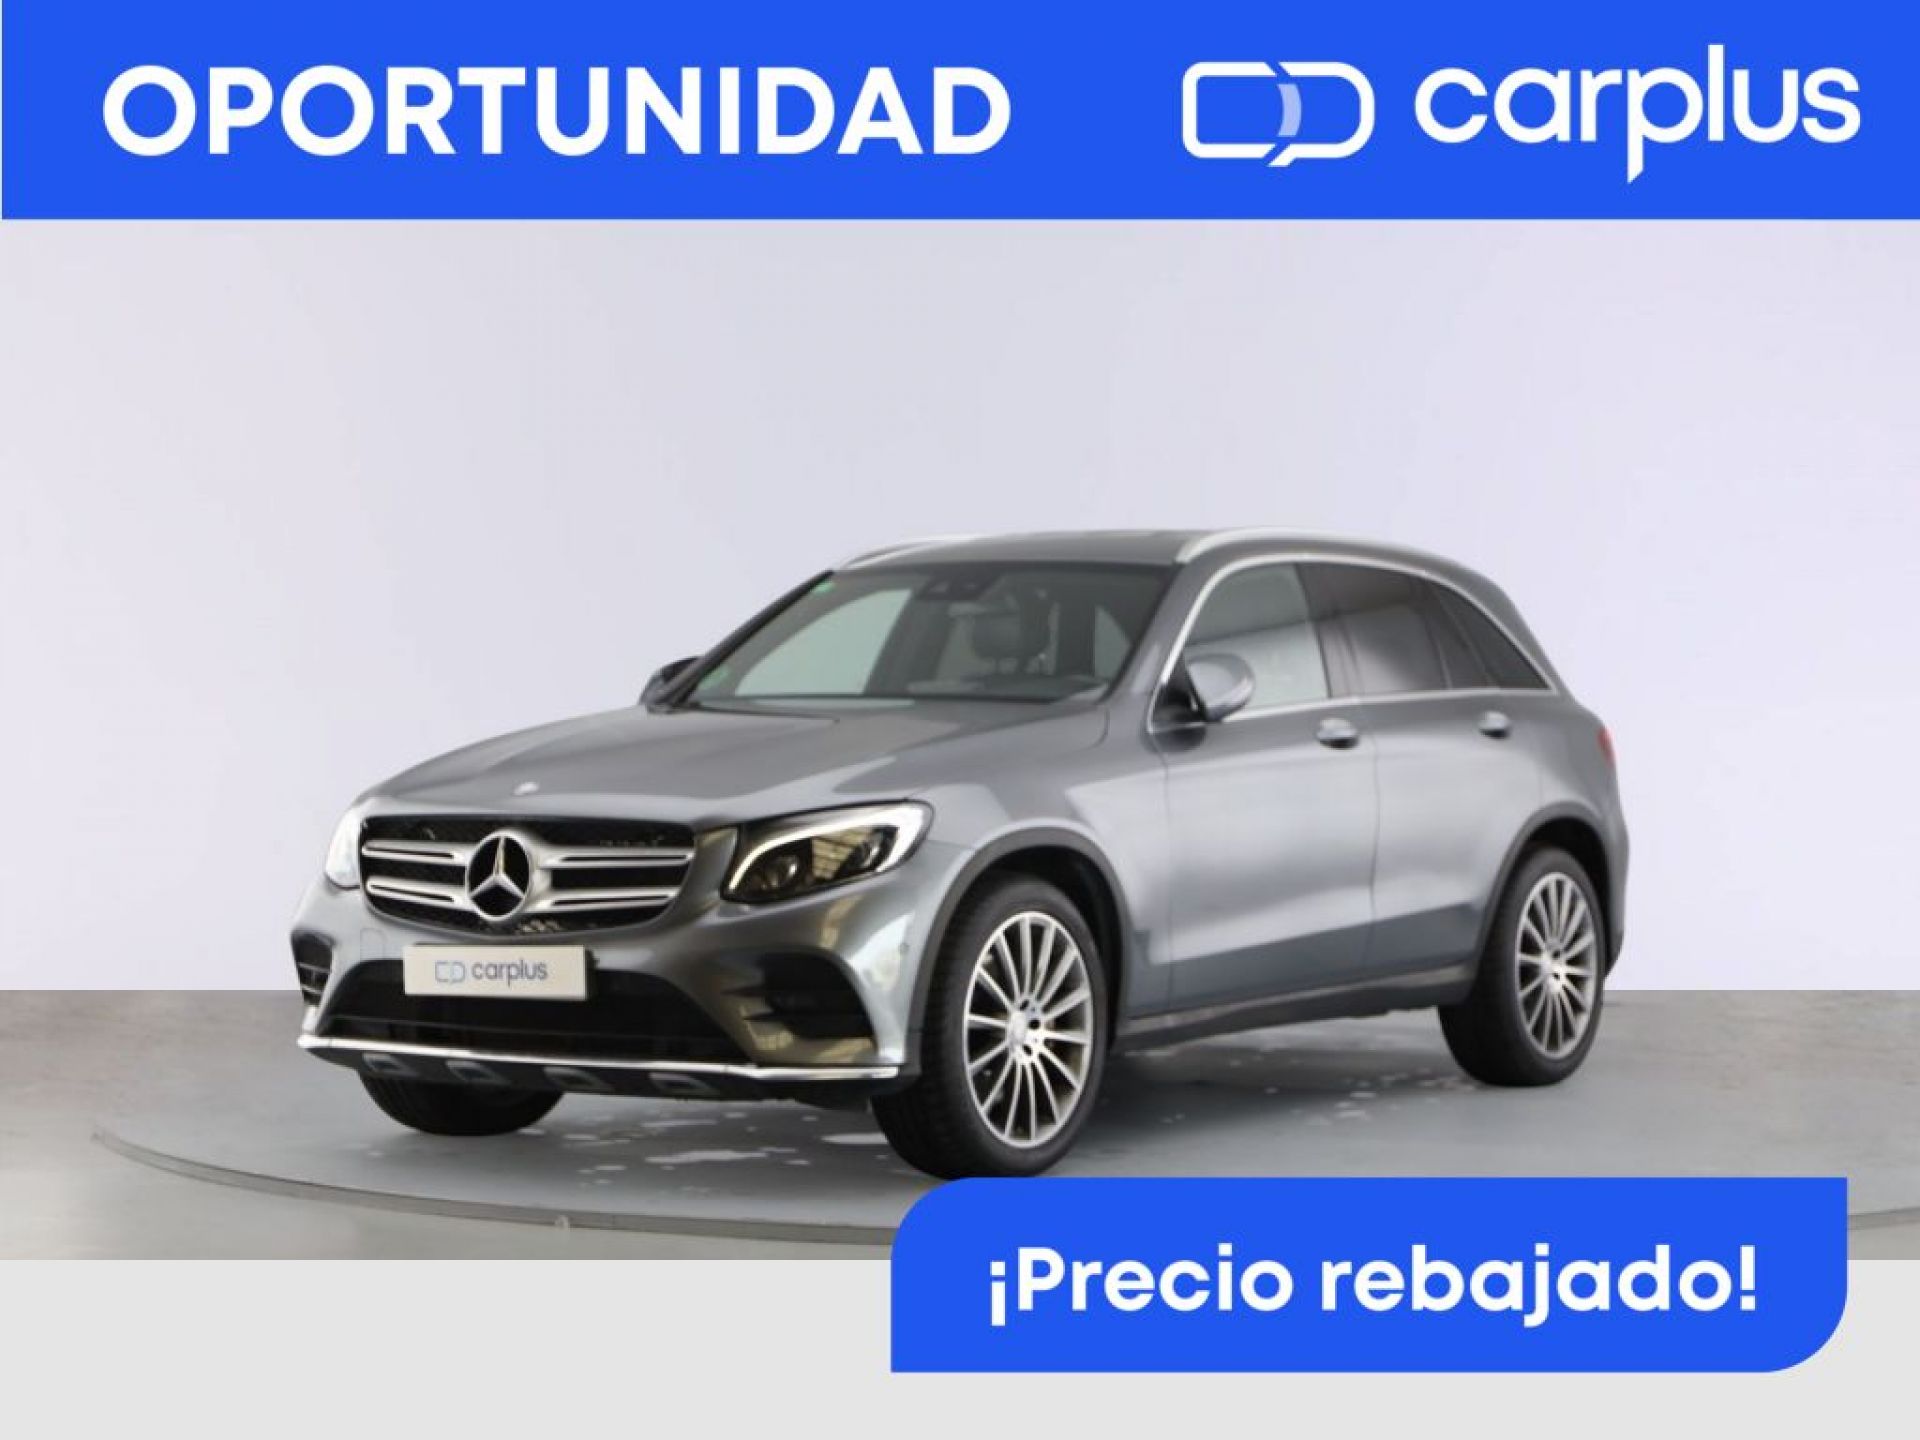 Mercedes Benz Clase GLC 250 d 4MATIC 2016 52900 kms Gris Selenita  (metalizado) segunda mano Madrid (4218) | Caetano Cuzco